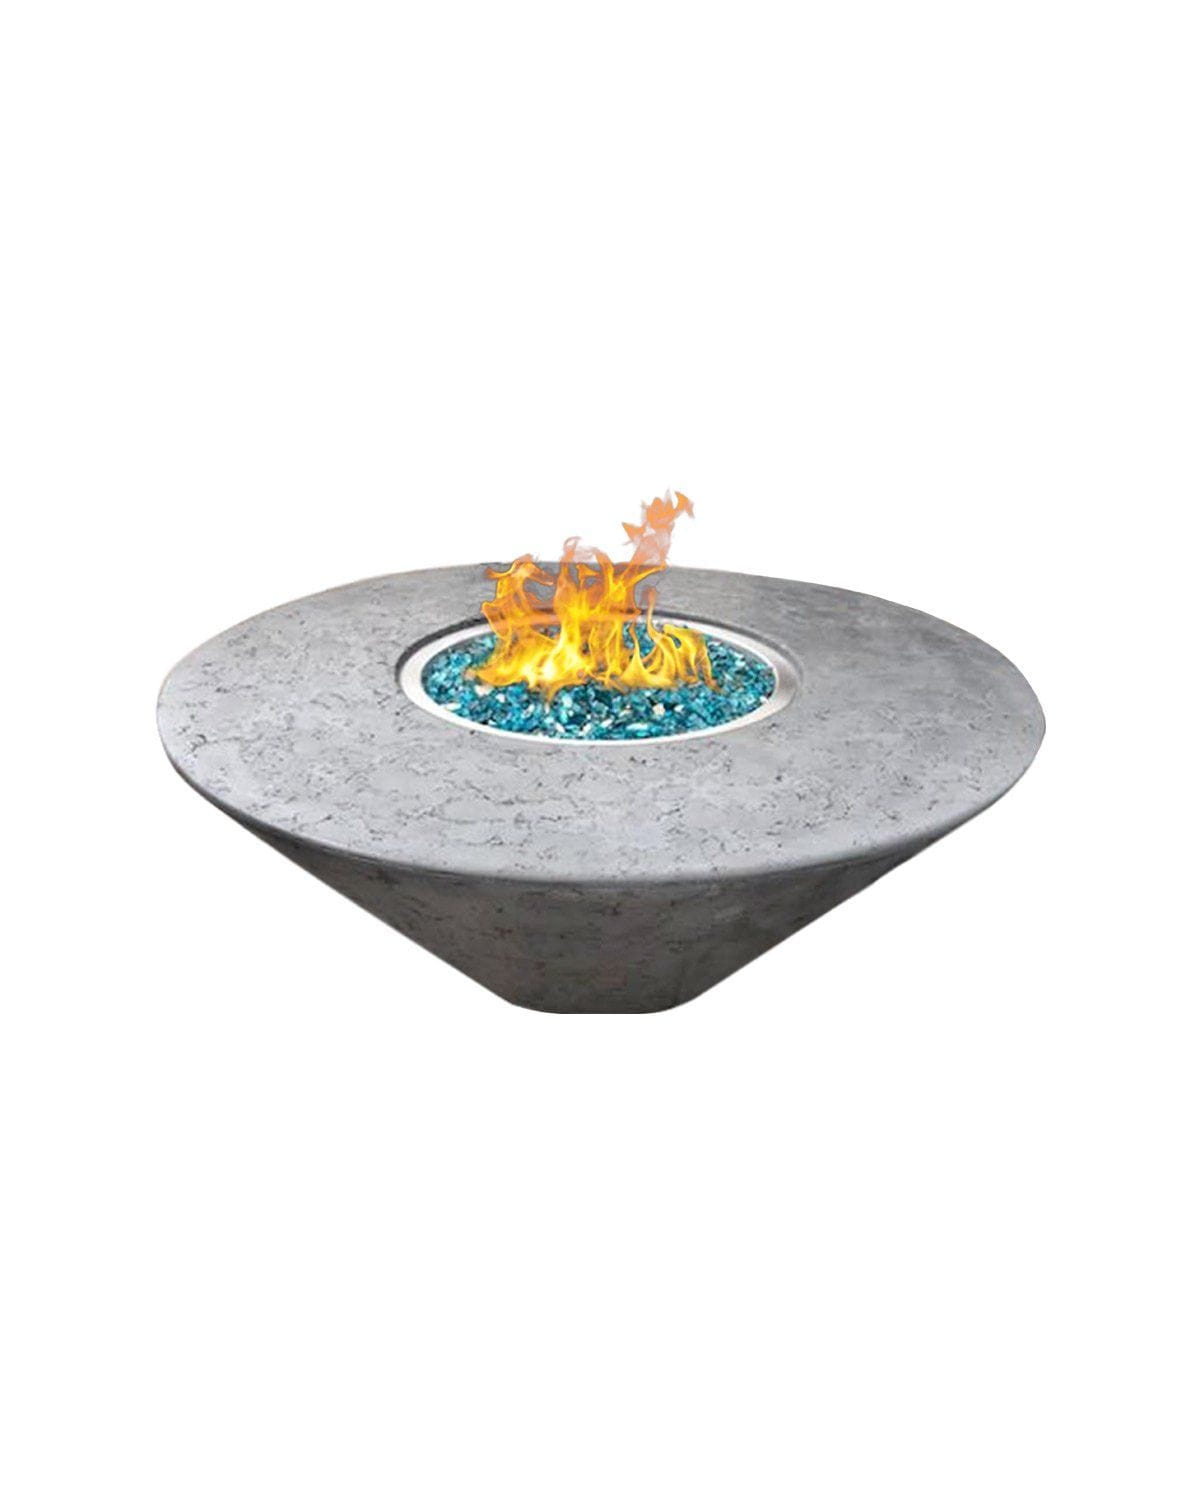 ROFT4818 Round Oblique Fire Table - 48W X 18H Gist